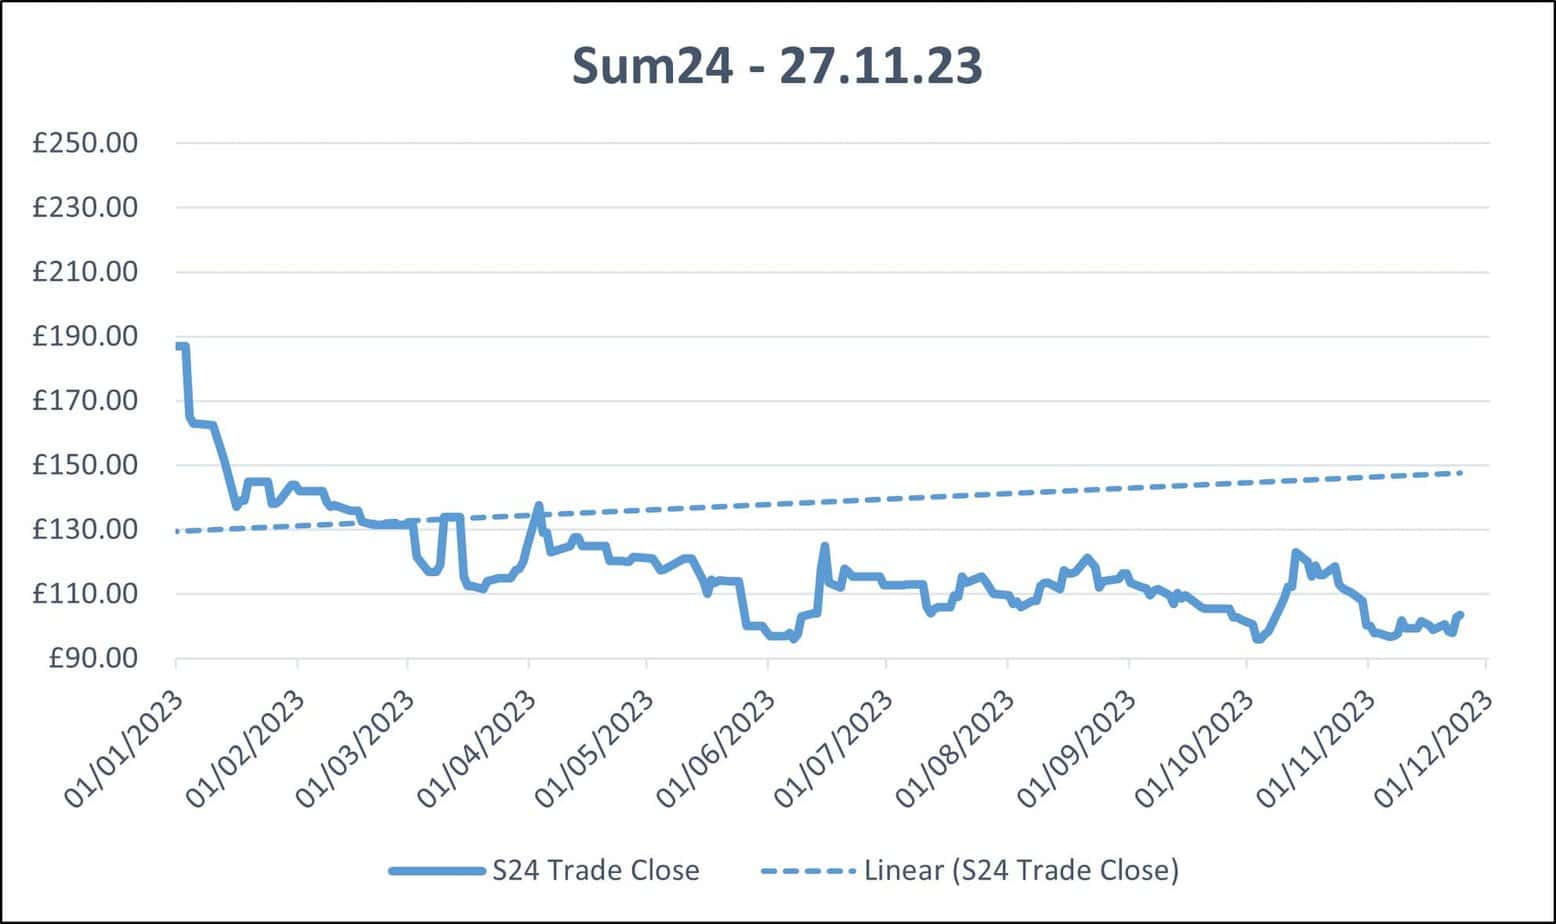 Sum24 wholesale electricity prices 27.11.23